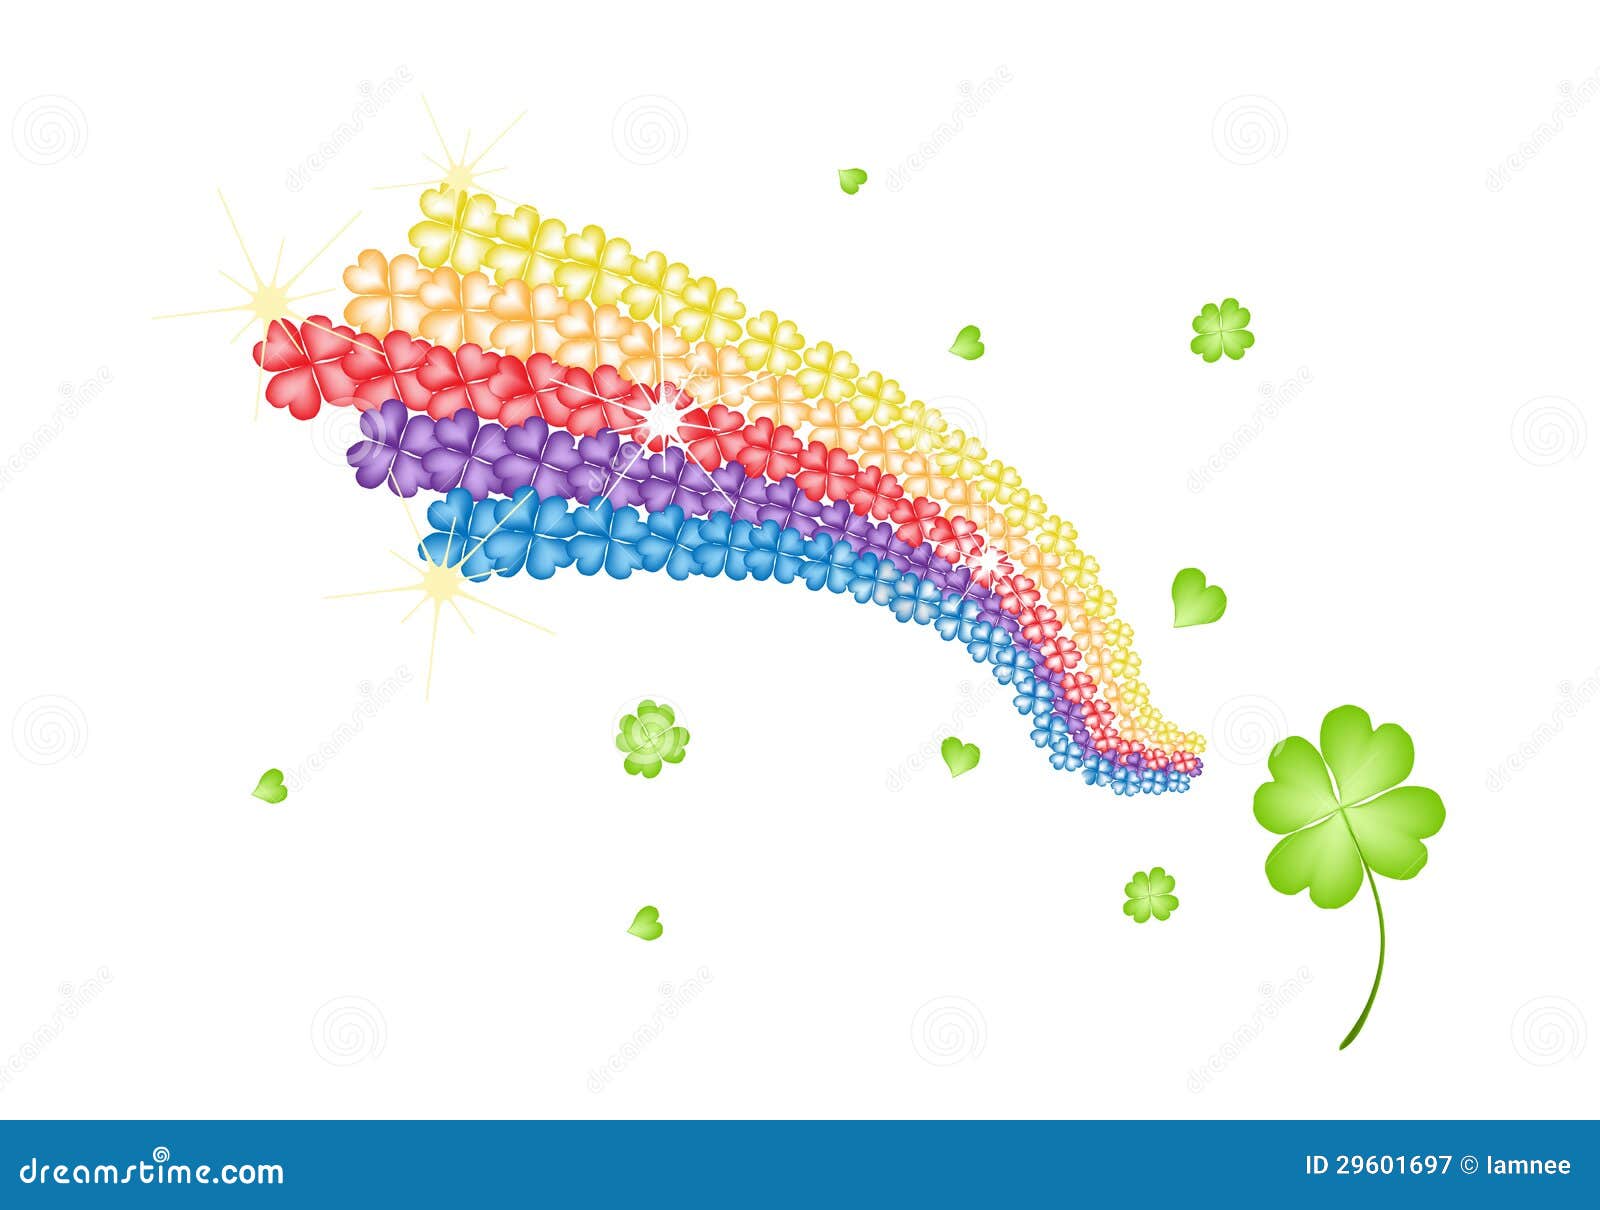 royalty free stock photography illustration four leaf clovers rainbow shape image